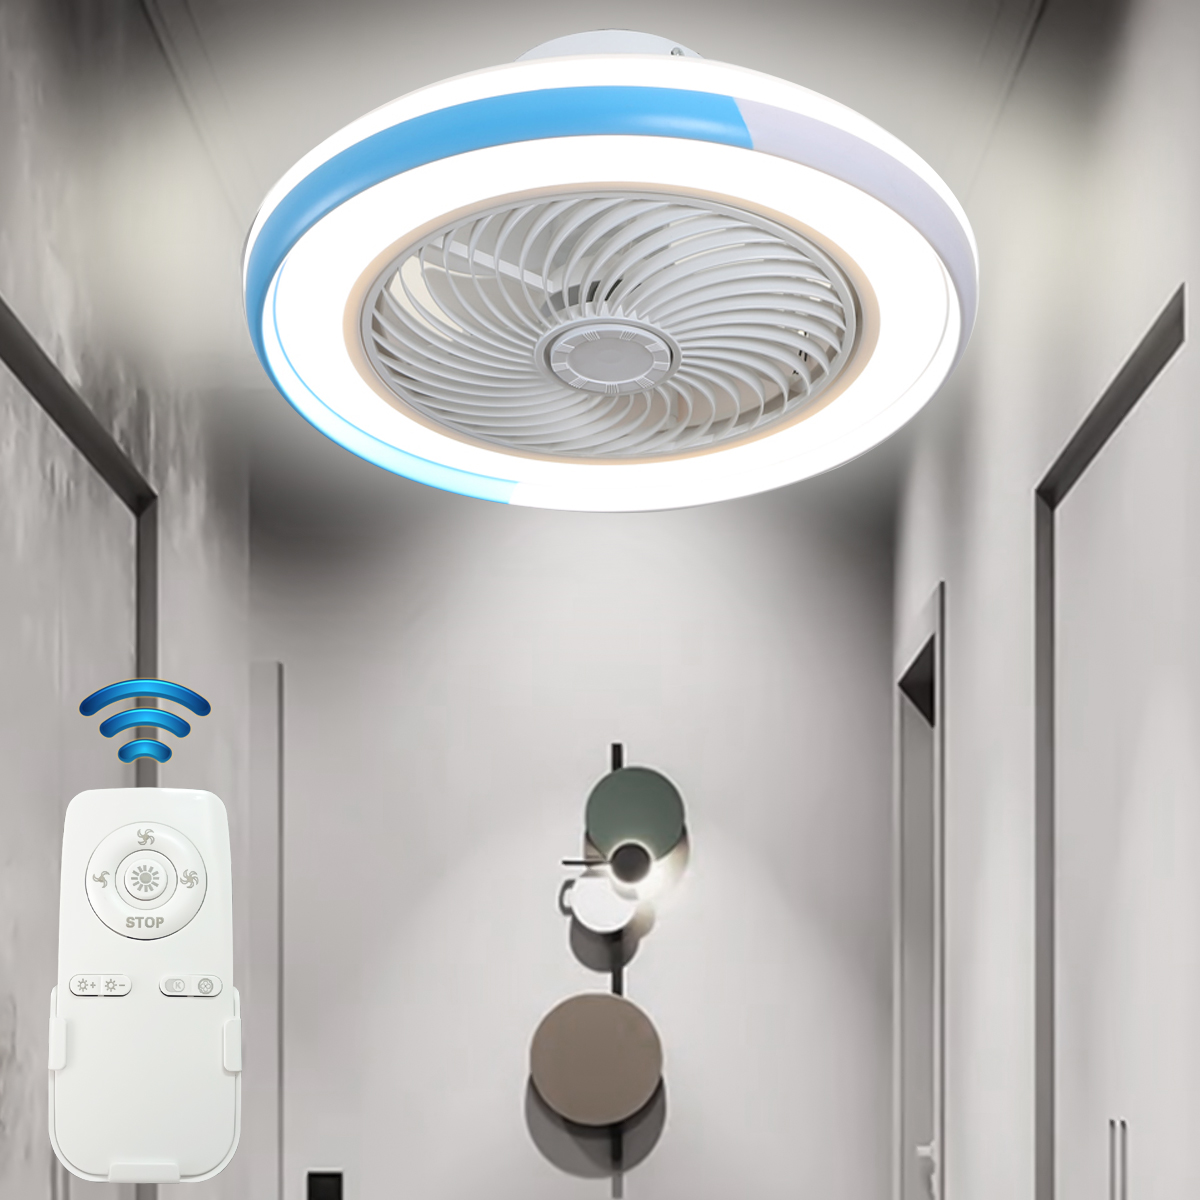 LED-Fan-Ceiling-Light-WiFi-Dimmable-Bedroom-Lamp-APPRemote-Control-220V-1861721-10